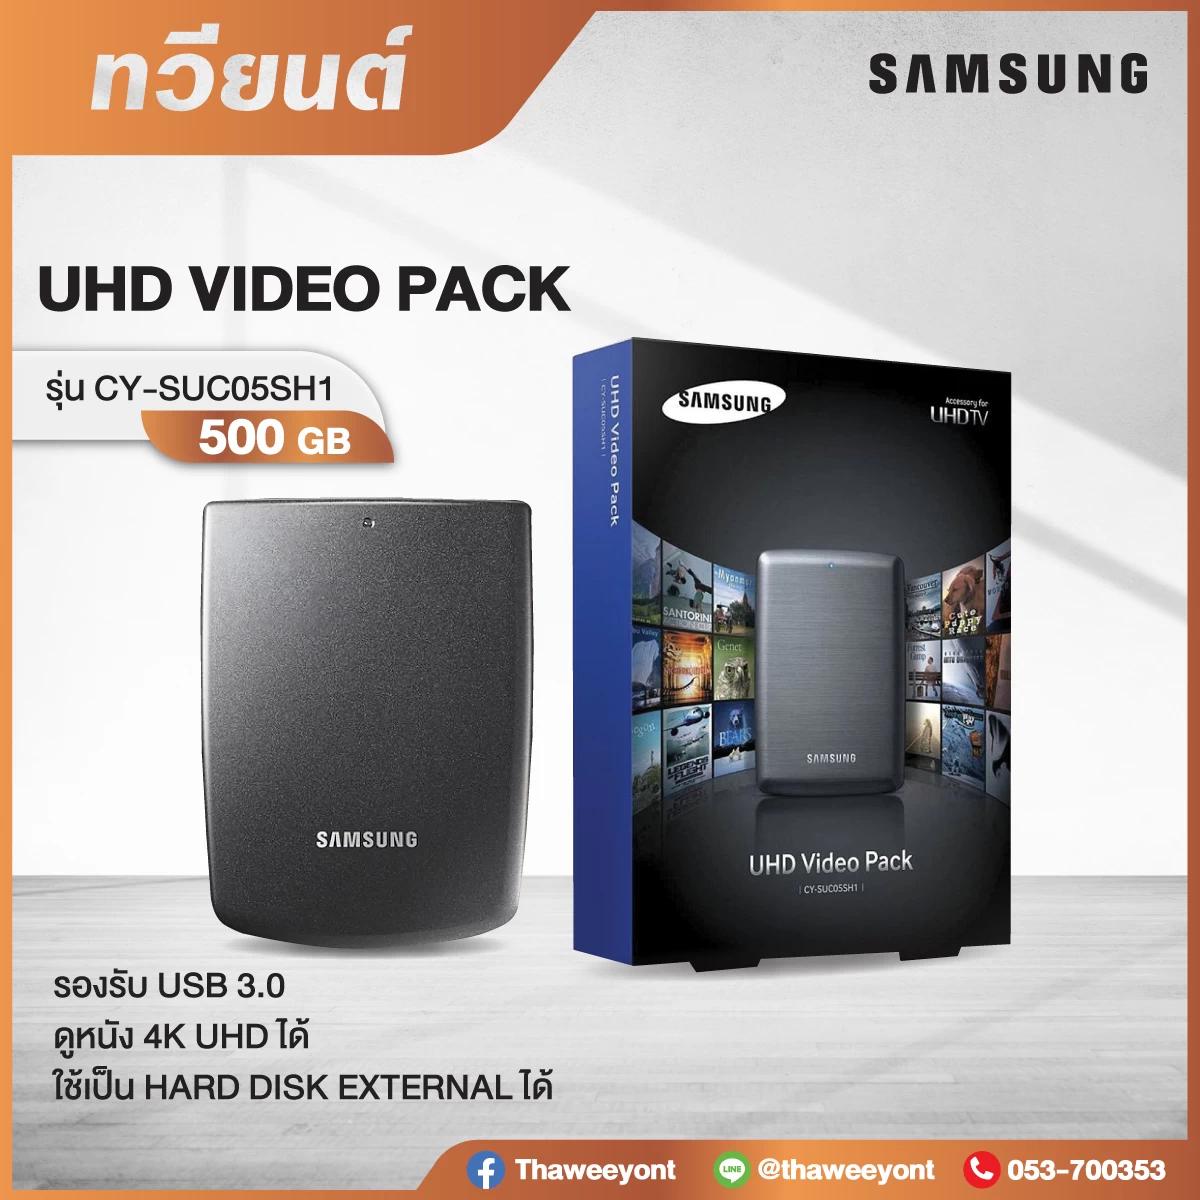 Samsung​ UHD Video Pack รุ่น CY-SUC05SH1XS เทขาดทุน ของแท้ ใช้เป็น External HDD ได้ จำนวนจำกัด